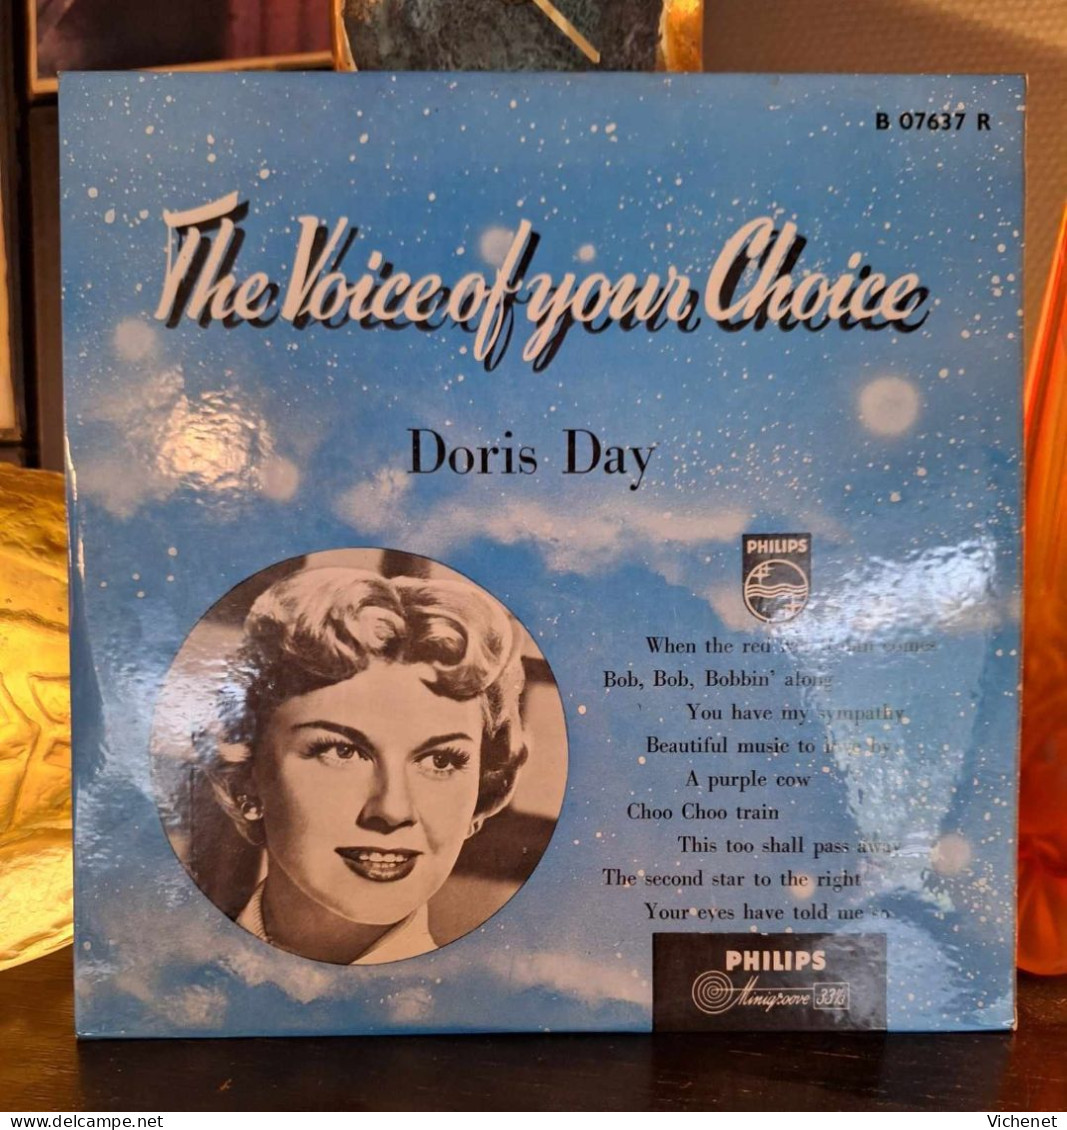 Doris Day - The Voice Of Your Choice - 25 Cm - Formatos Especiales